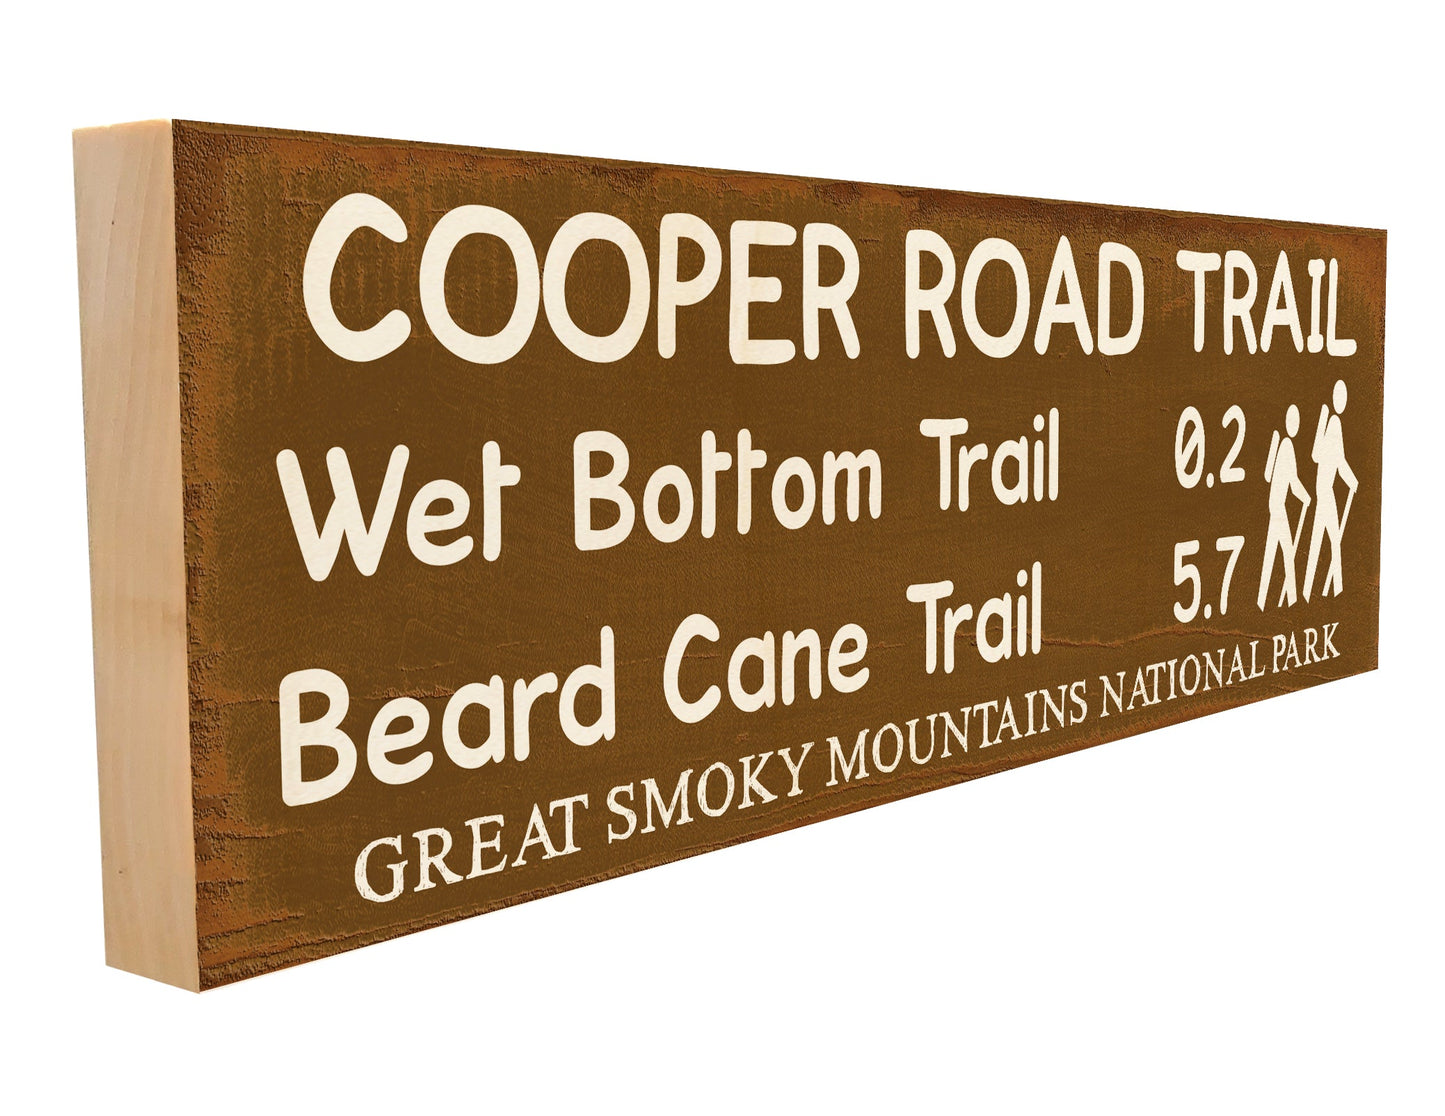 Cooper Road Trail Marker.